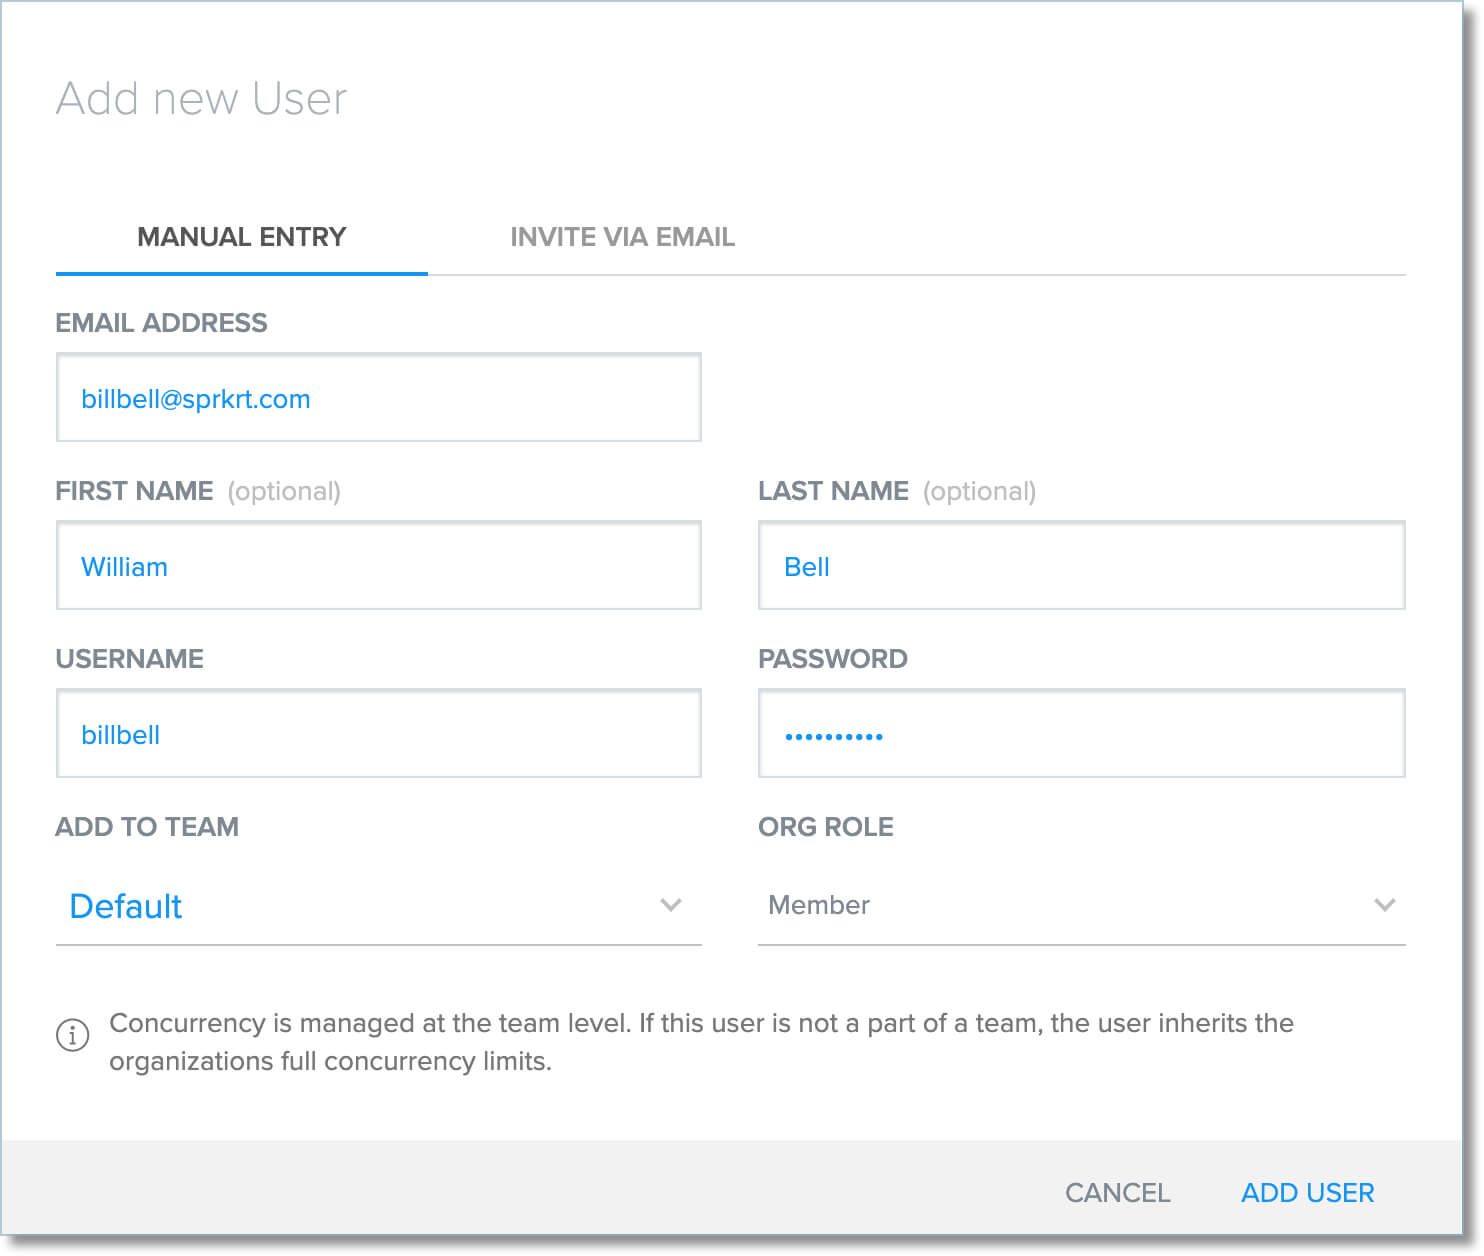 Add new user - manually